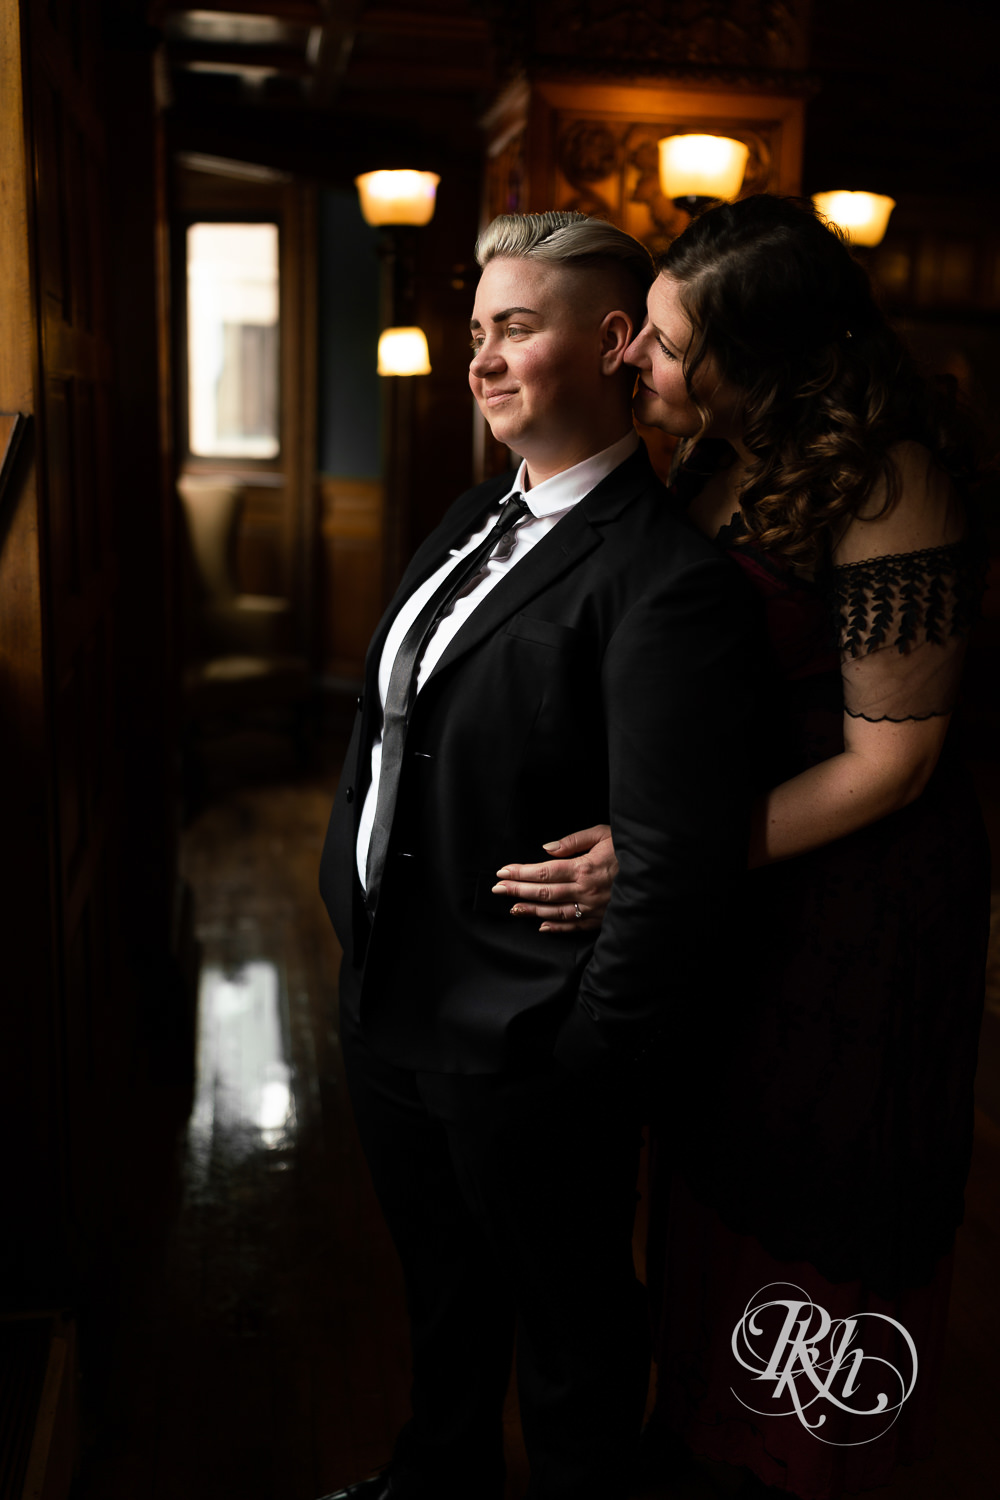 Lesbians smile dressed in Titanic dress and suit in Landmark Center in Saint Paul, Minnesota.